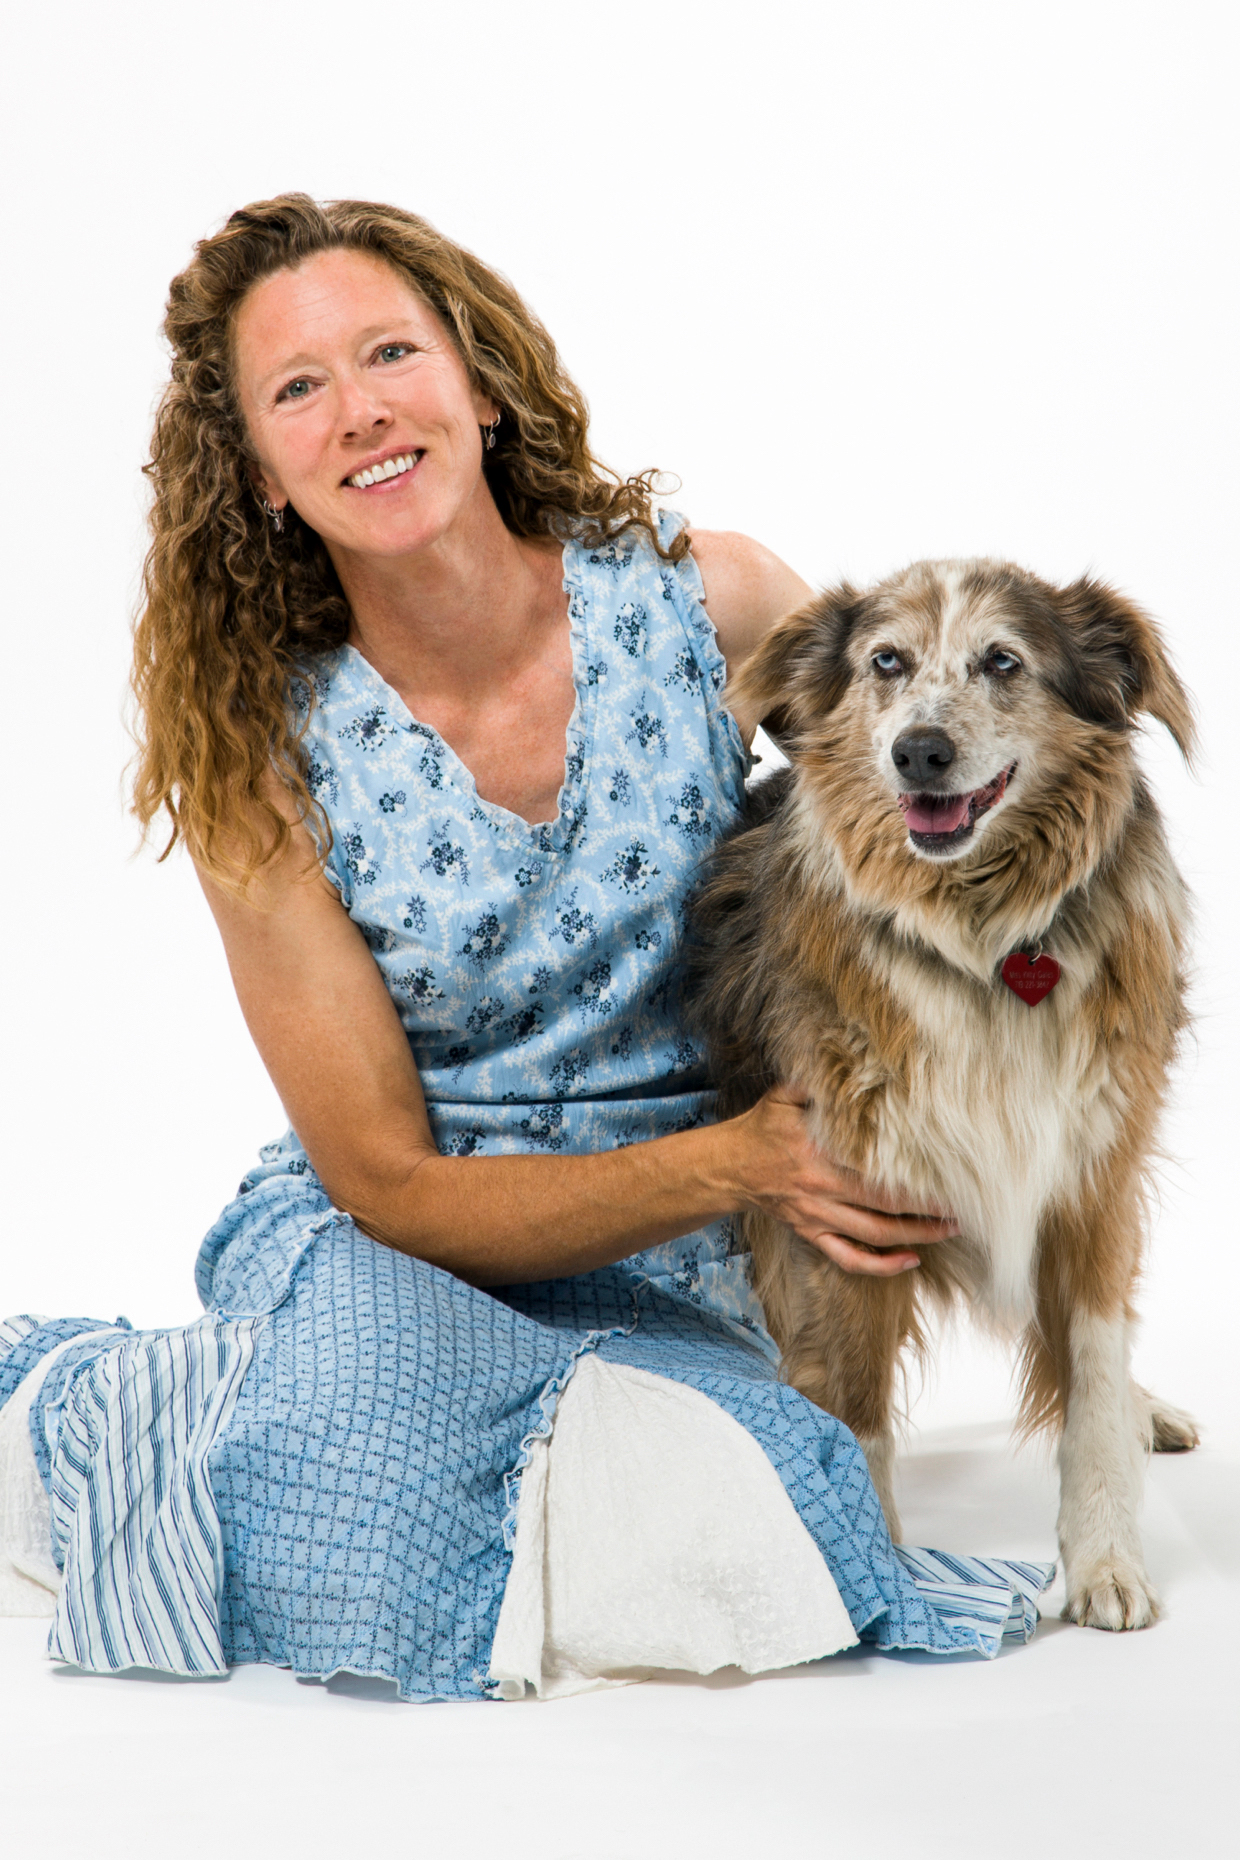 Studio photograph of attractive woman in summer dress with her pet dog, Miss Kitty, an Australian Shepherd mix